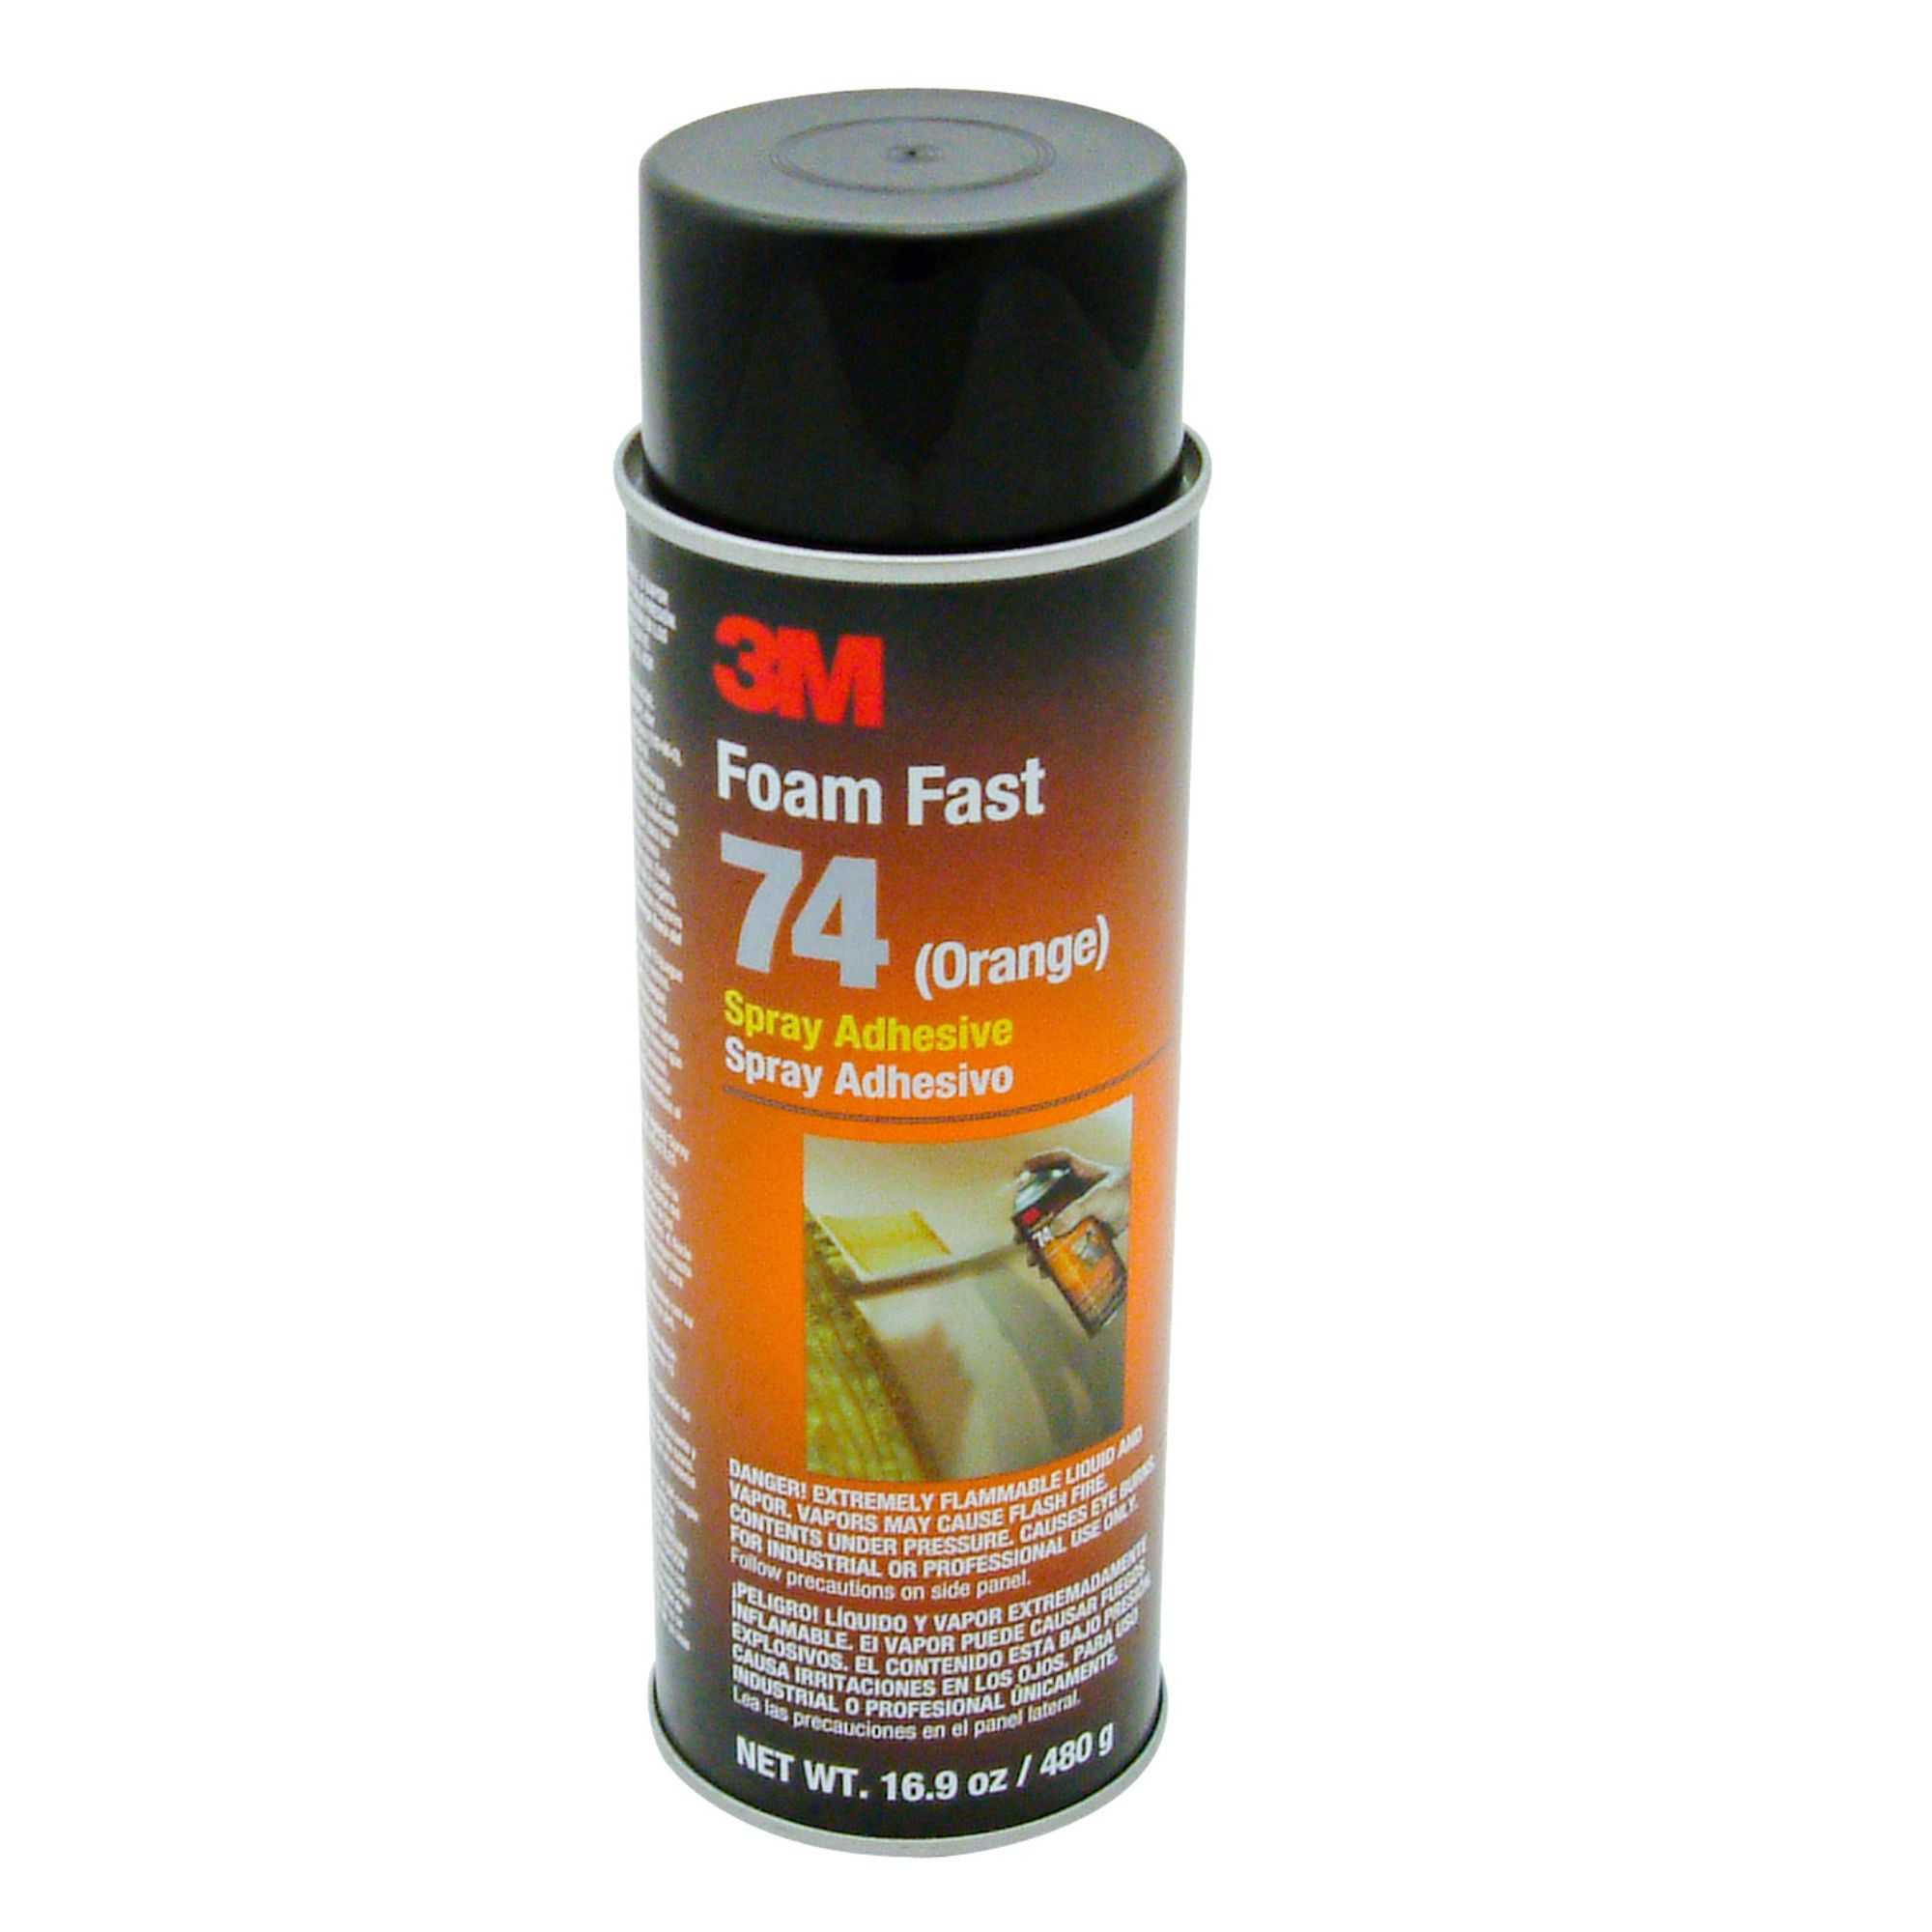 3M Foam Fast Spray Adhesive [Orange] (74)